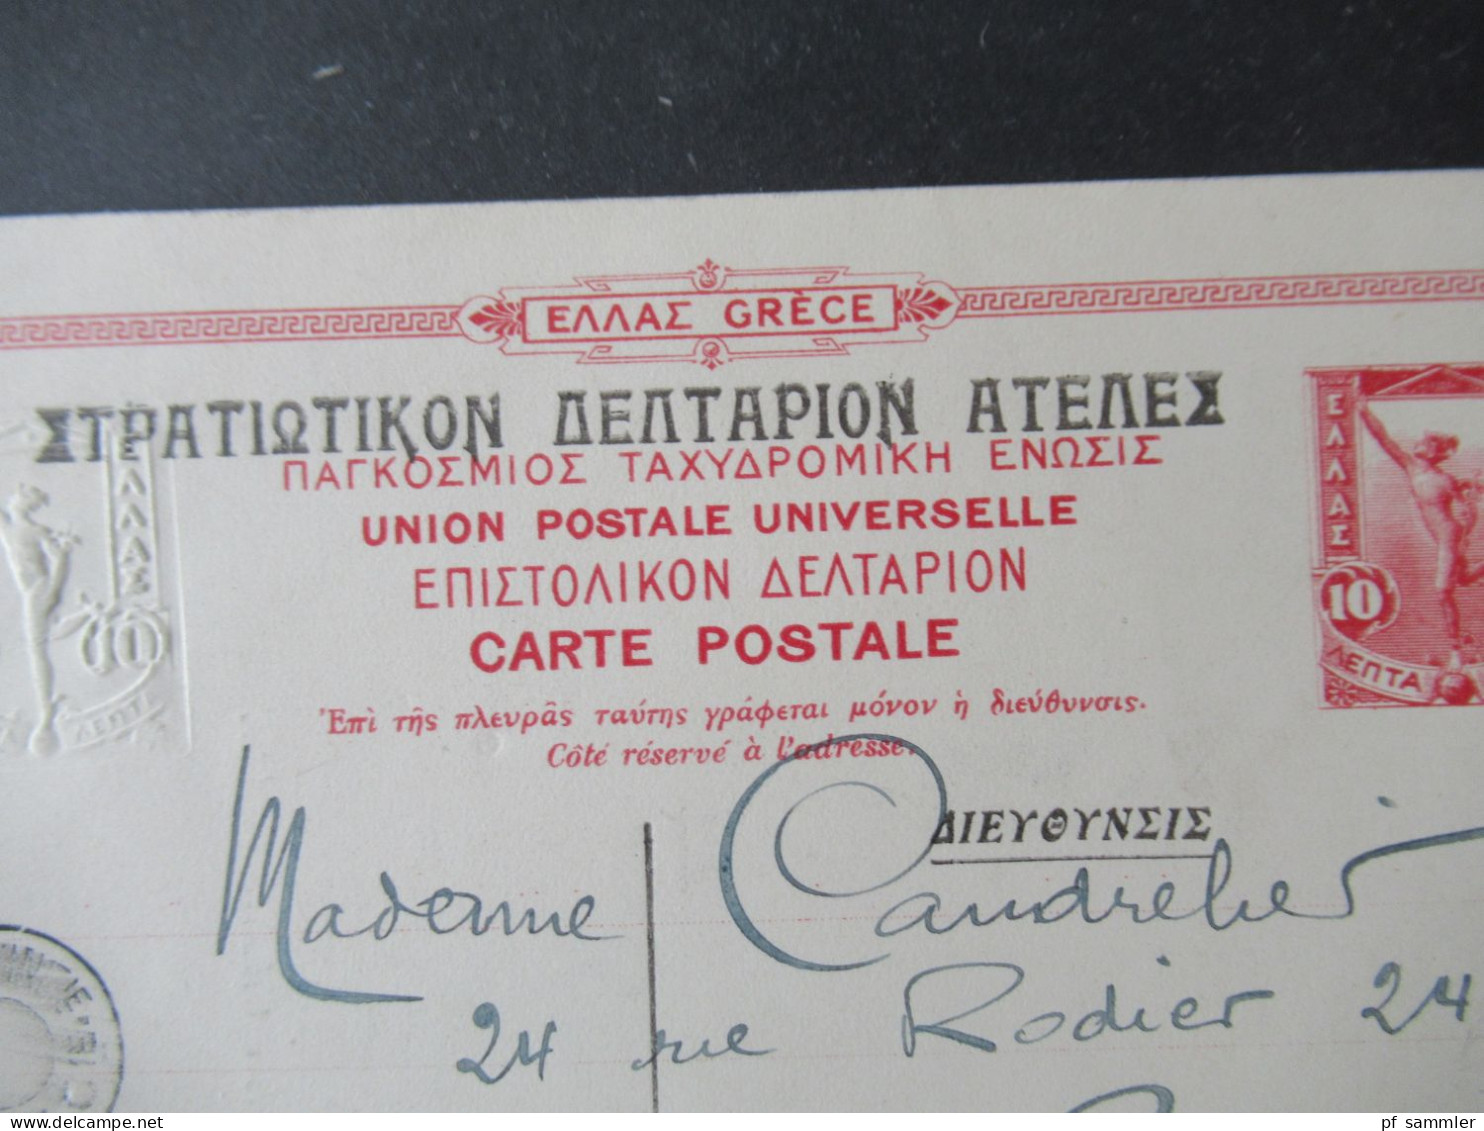 Griechenland 1919 GA Mit Aufdruck Bildpostkarte Athenes La Cathedrale Edition Du Service Des Postes Helleniques - Enteros Postales